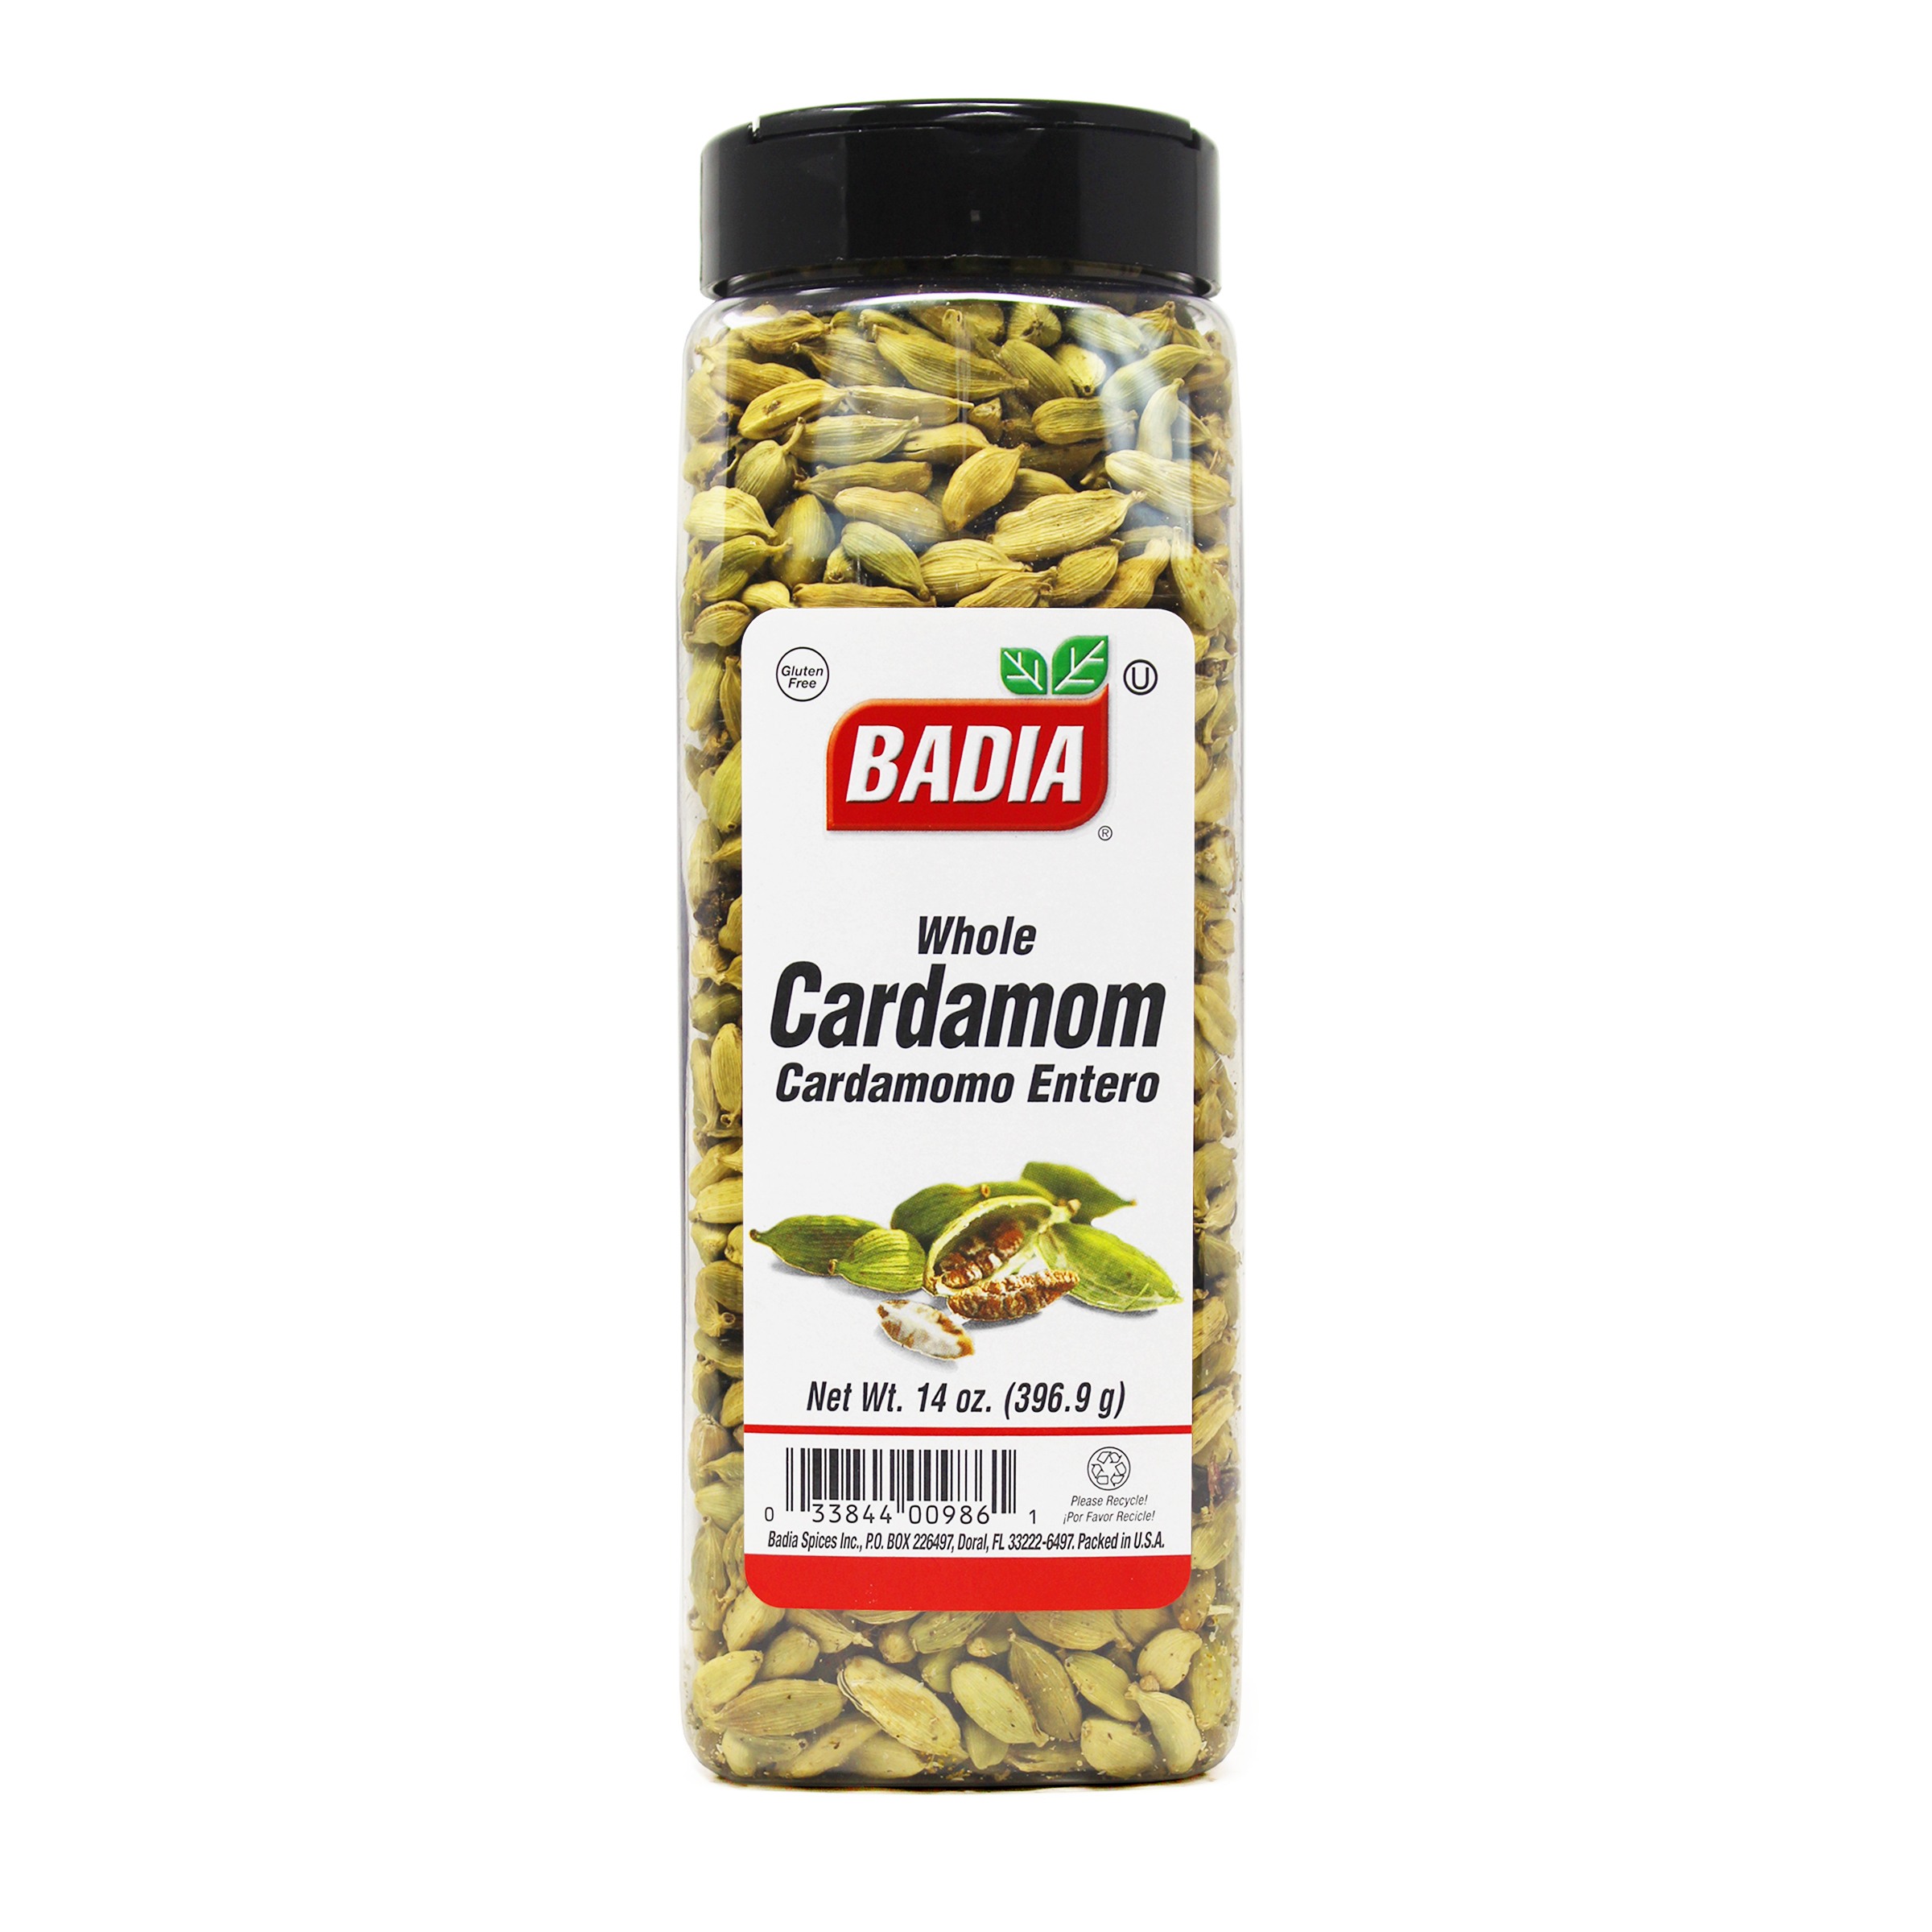 Badia Ground Cardamom Green Powder Seed, Cardamomo en Polvo Molido 16 oz